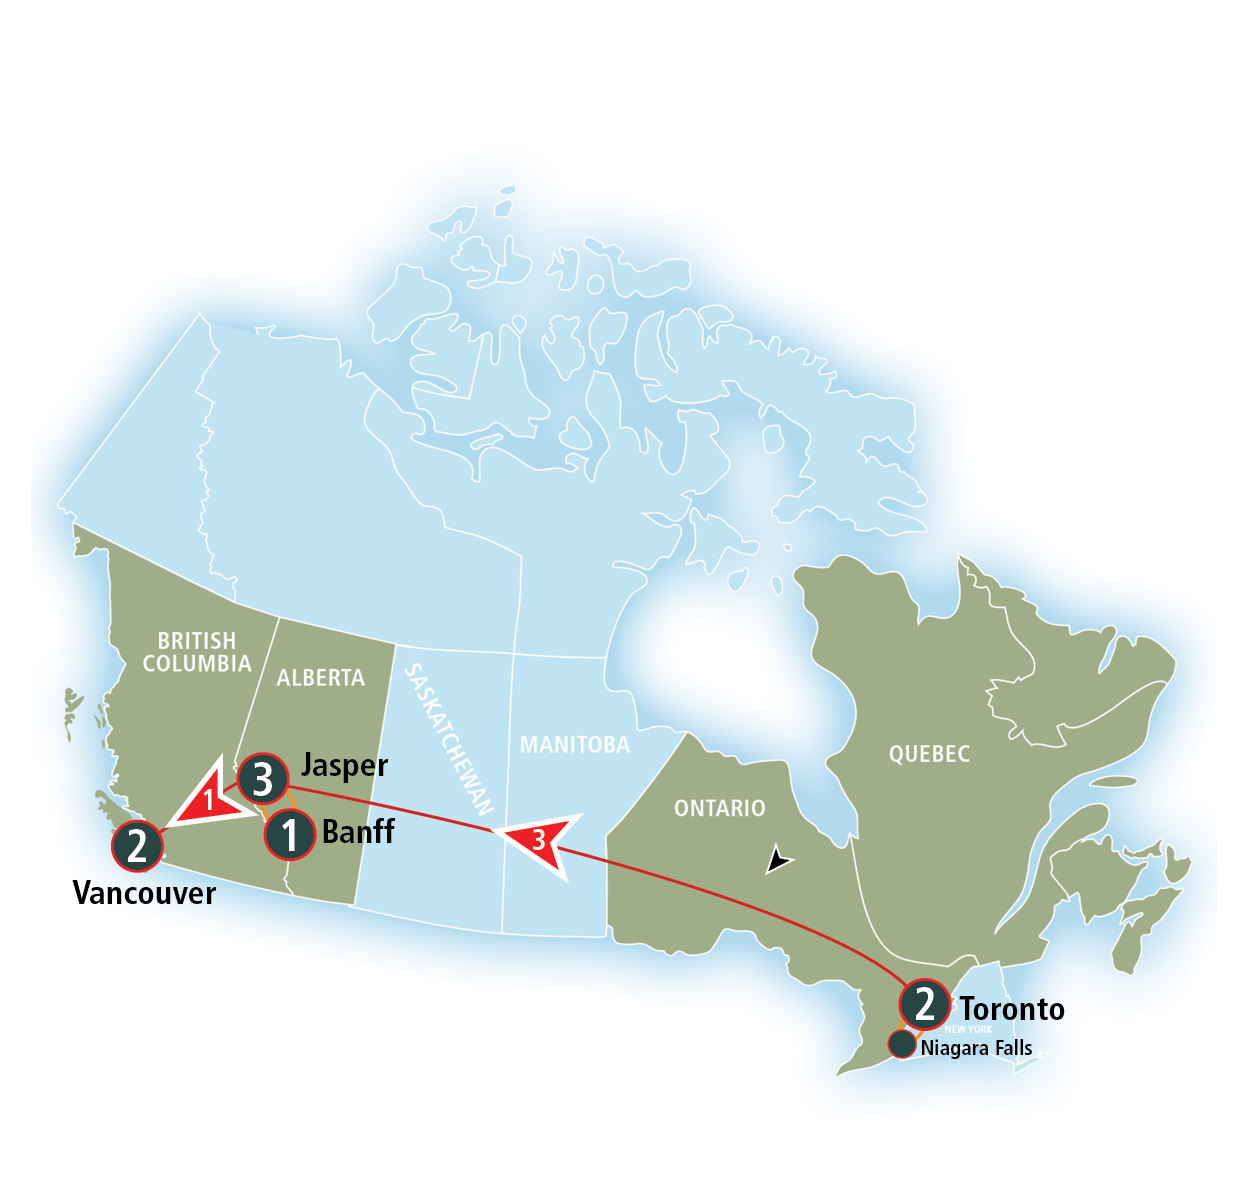 Explore Canada: Train Map & Routes